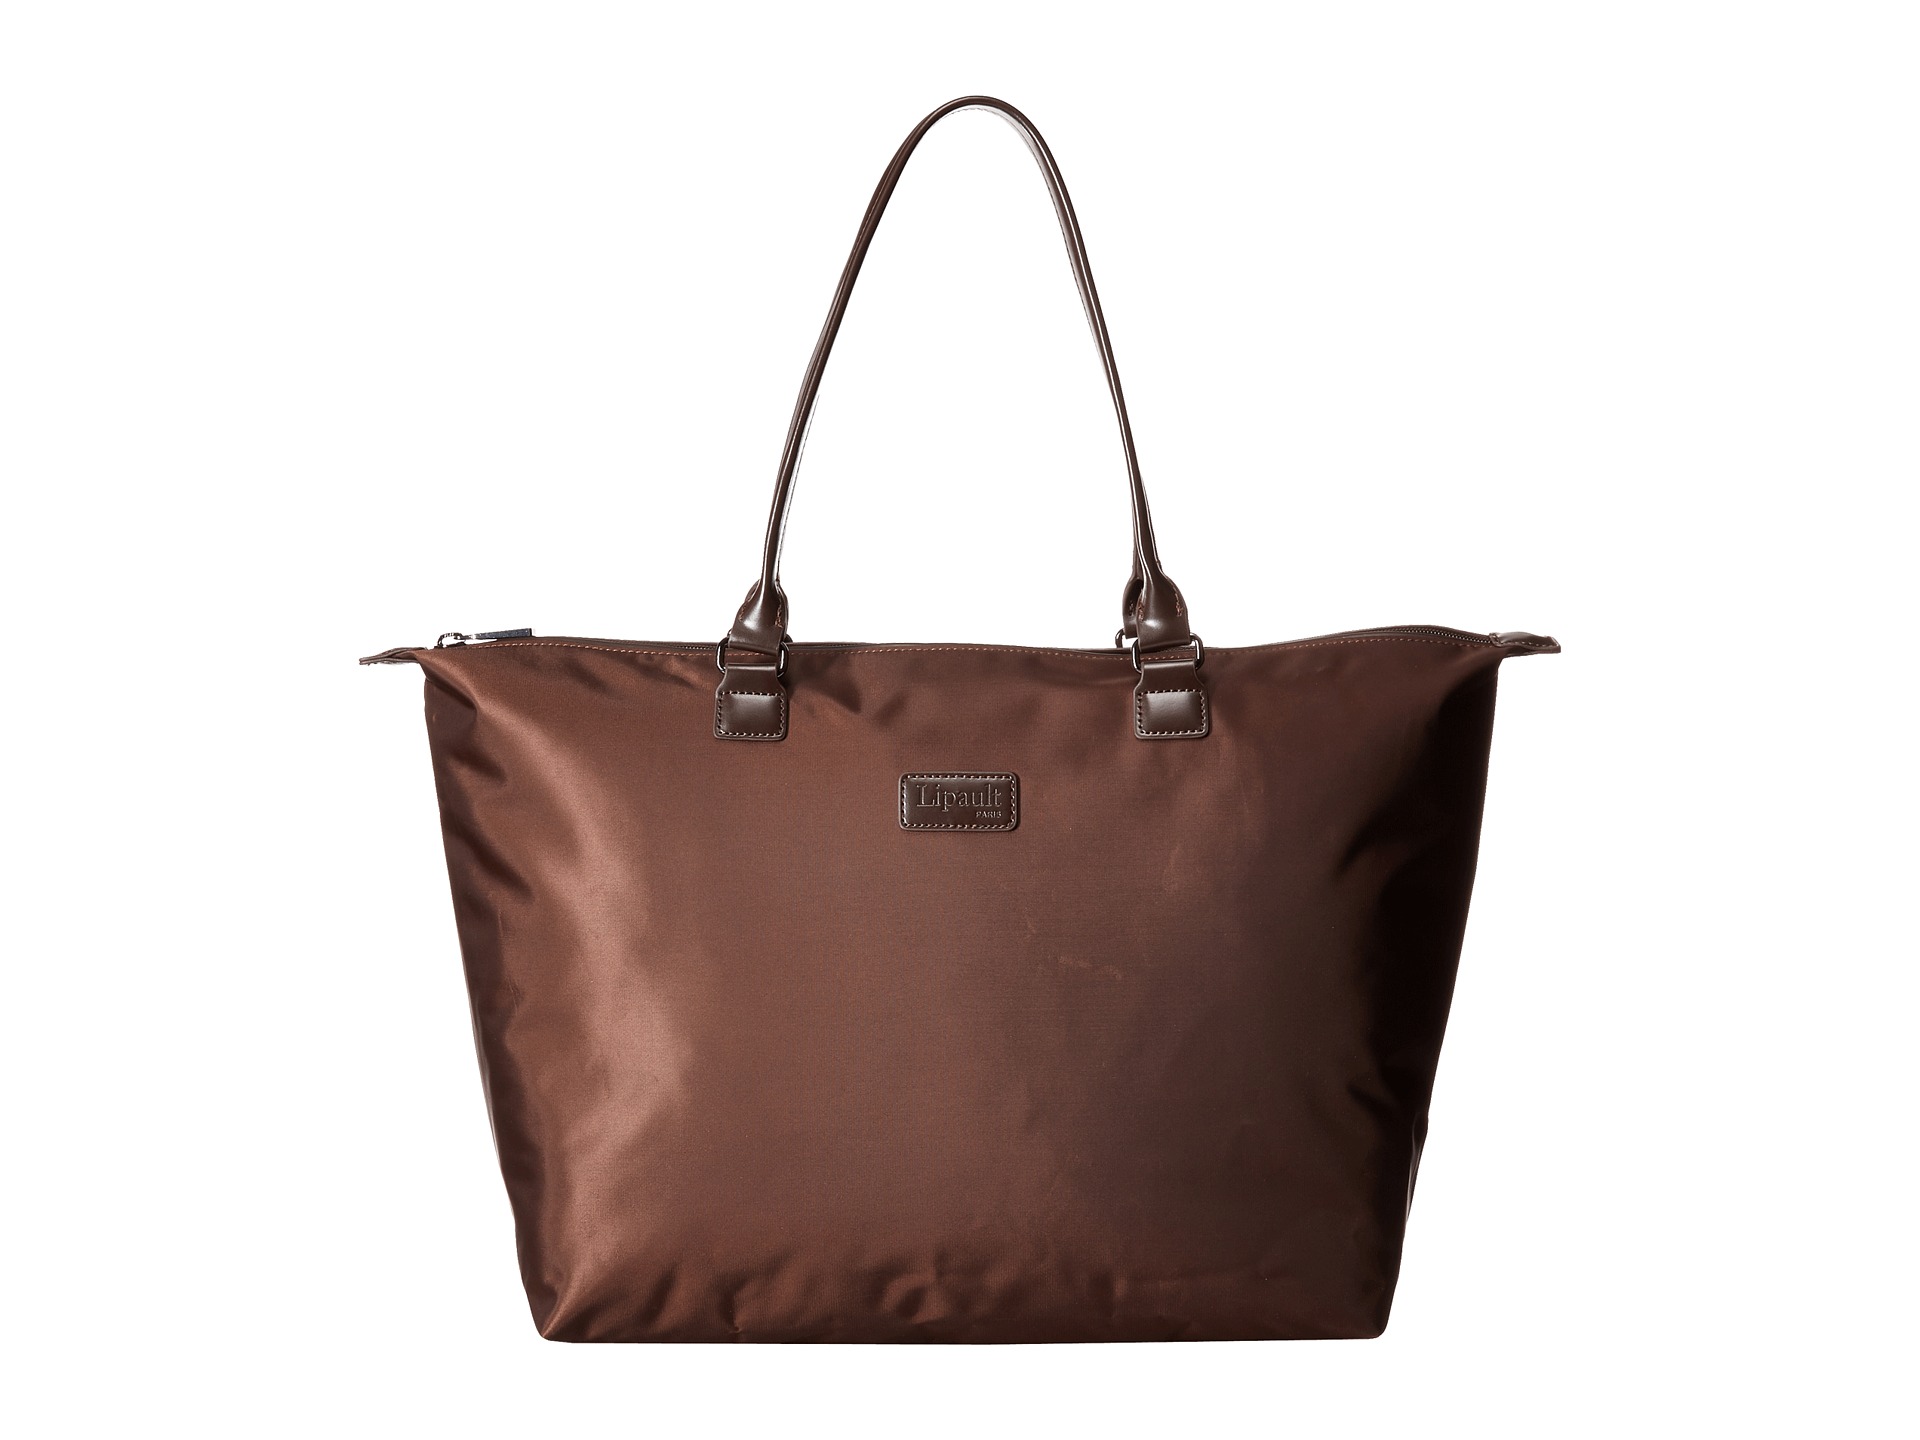 Lipault Paris Lady Plume Tote Bag - Zappos.com Free Shipping BOTH Ways